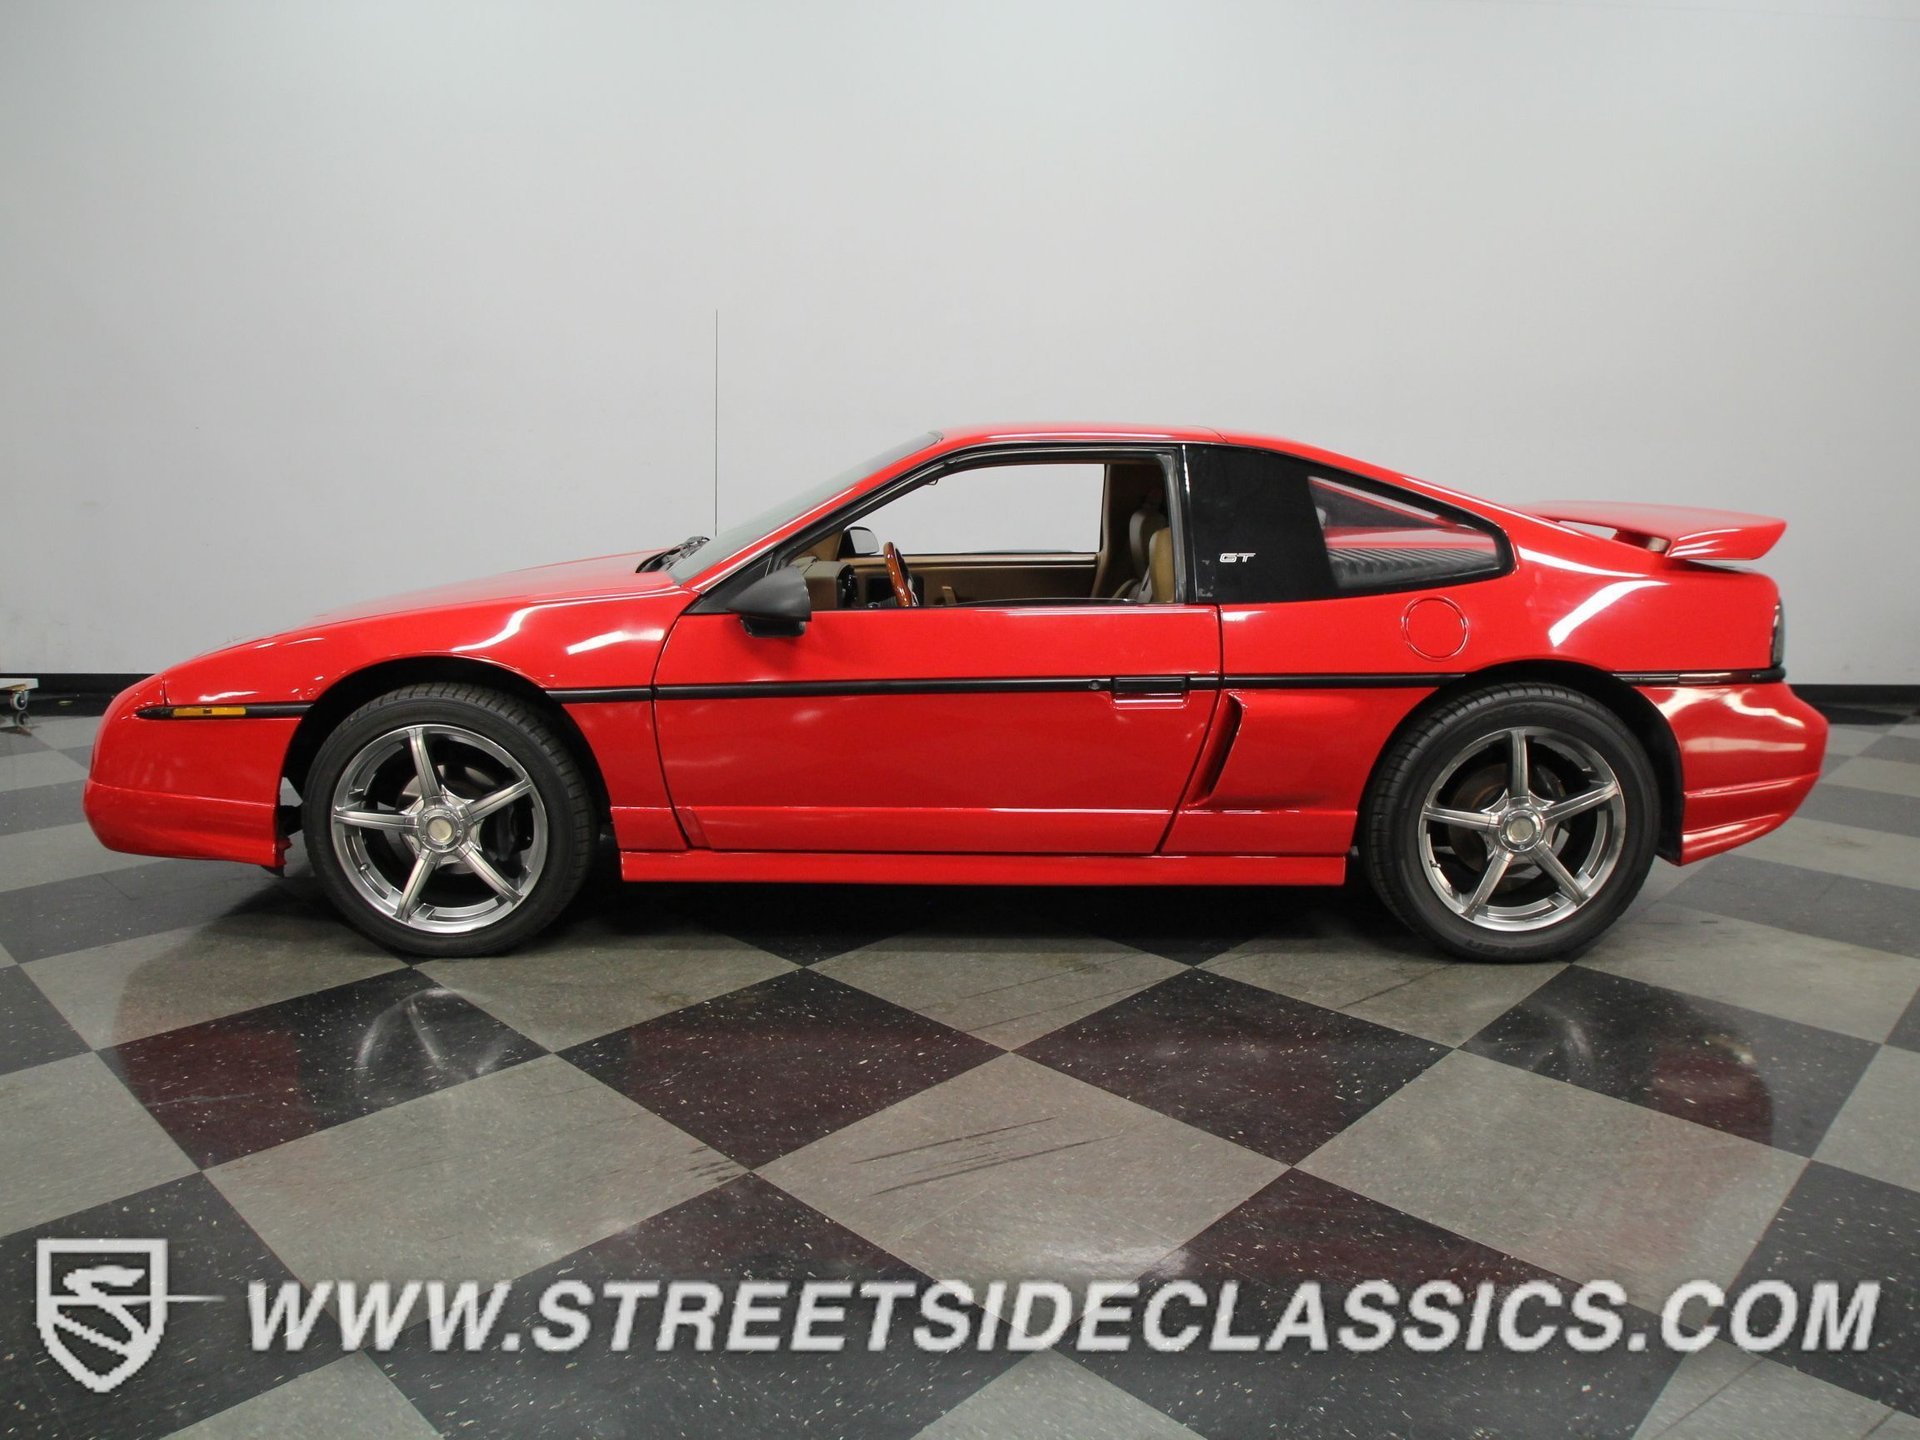 1988 Pontiac Fiero  Classic Cars for Sale - Streetside Classics